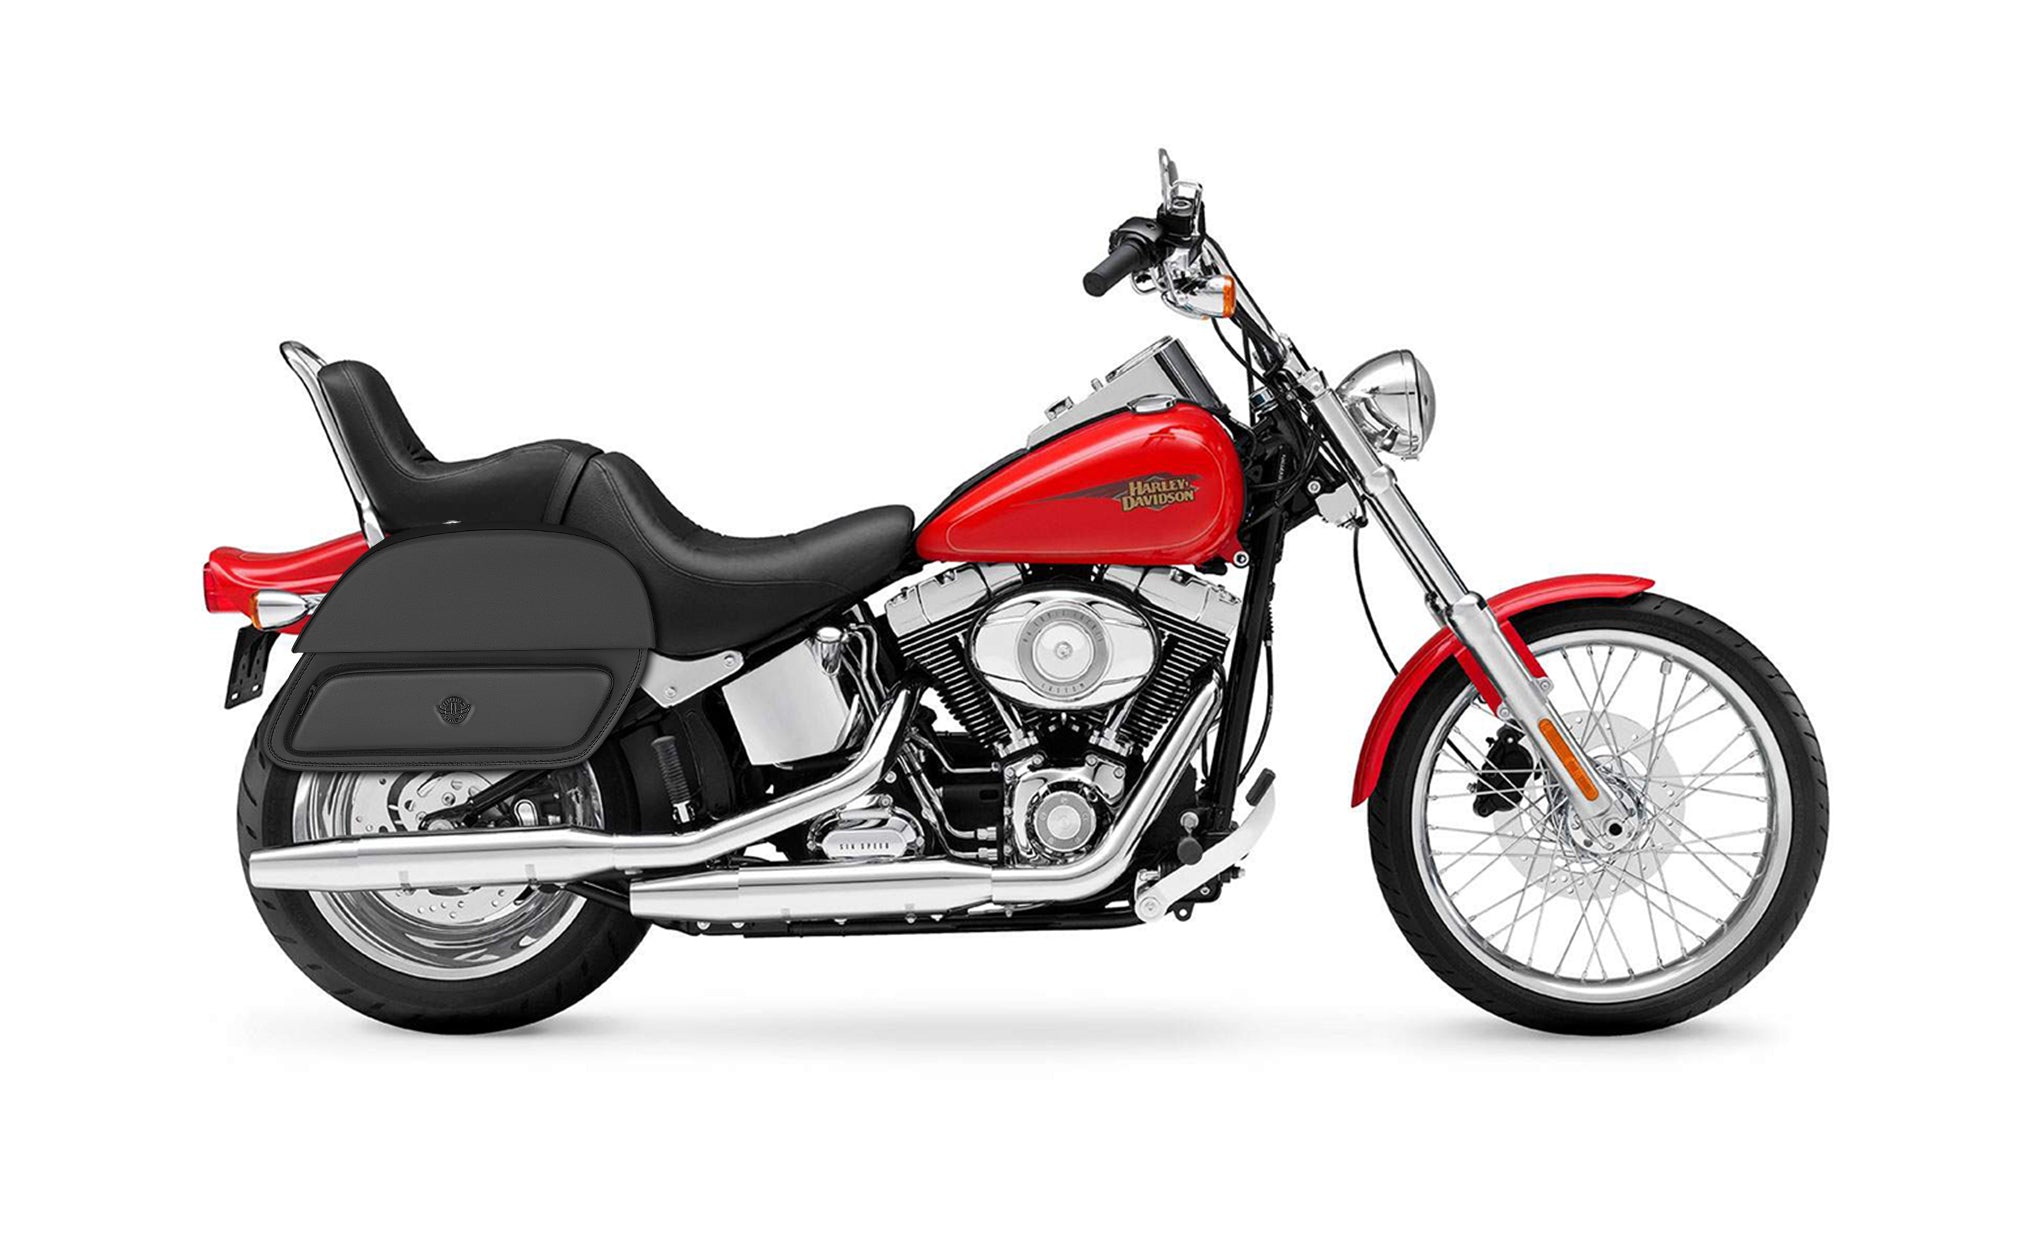 28L - Pantheon Medium Motorcycle Saddlebags for Harley Softail Custom FXSTC @expand